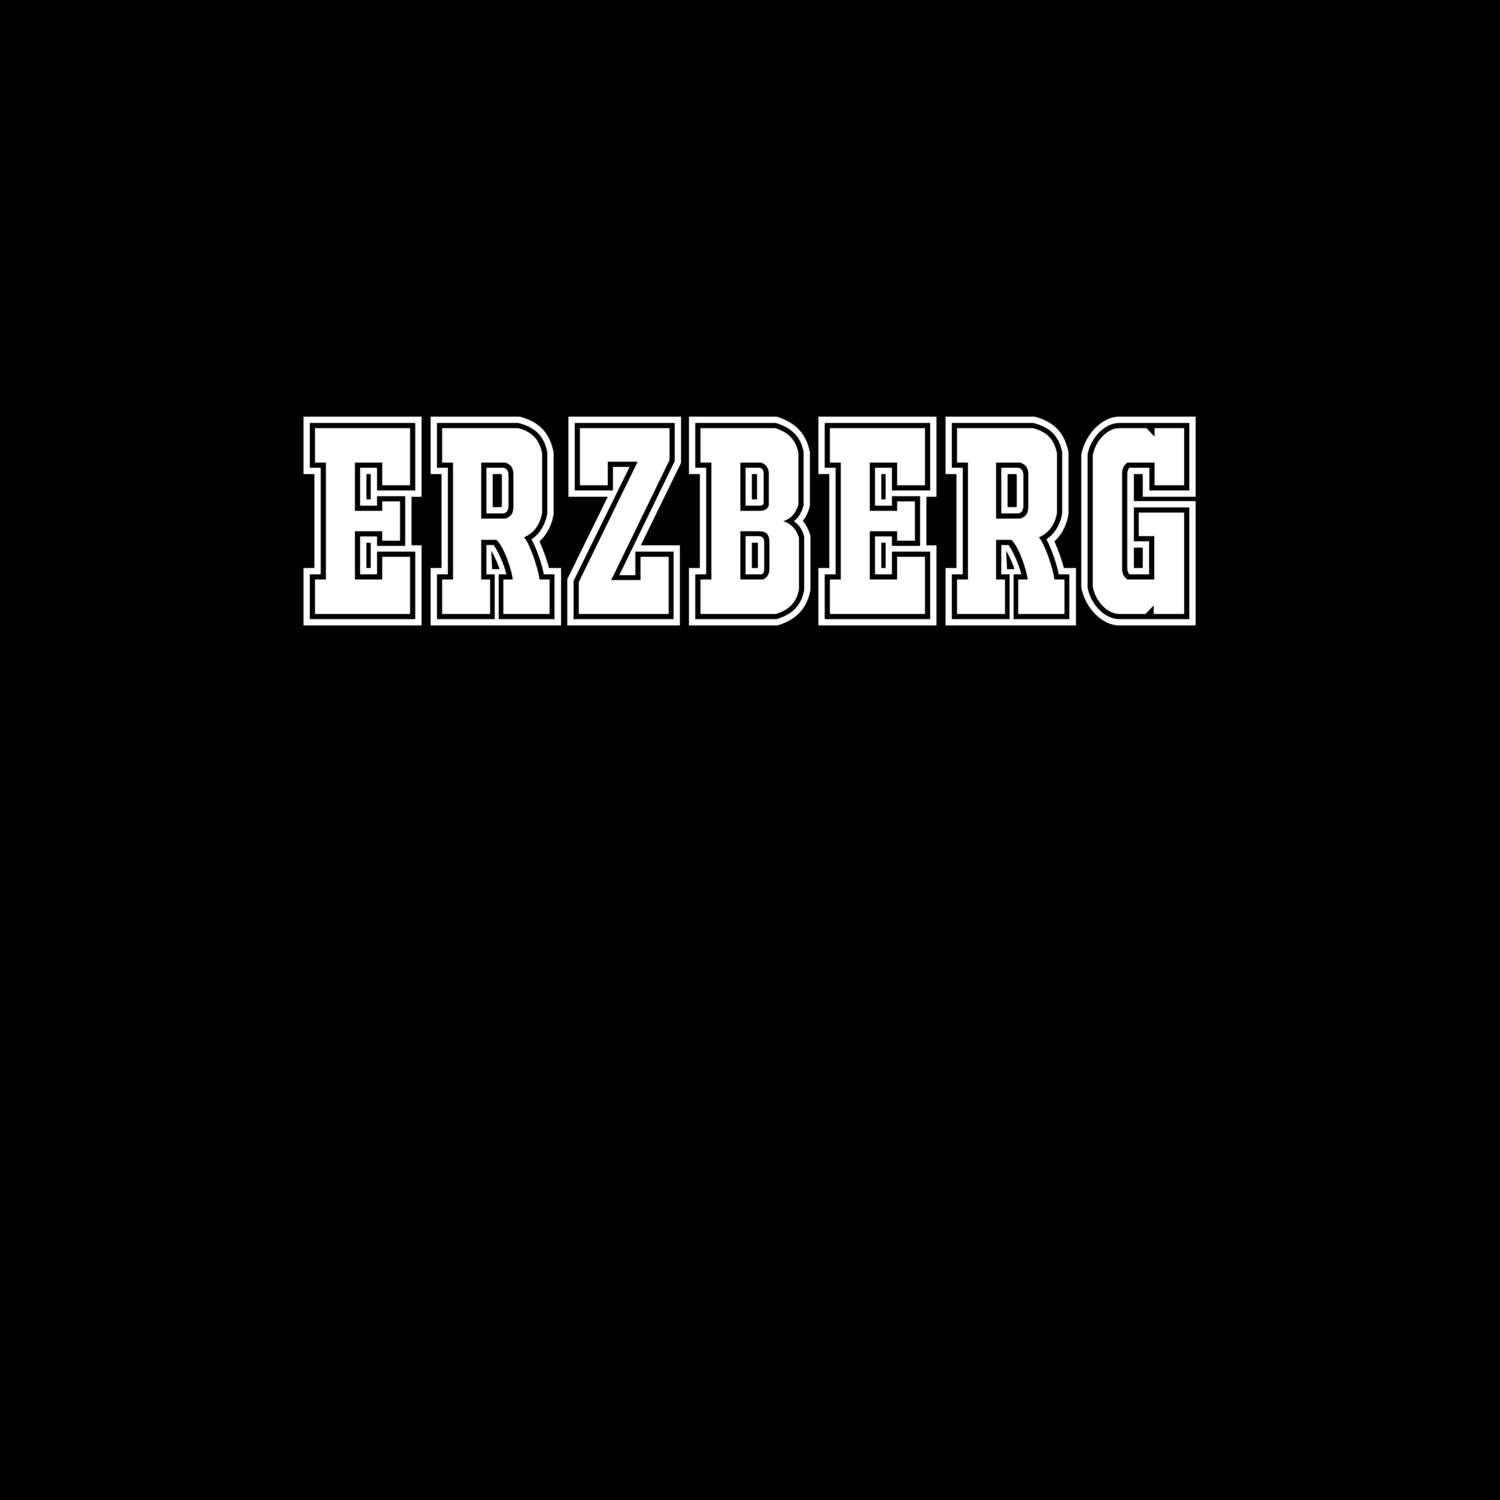 Erzberg T-Shirt »Classic«